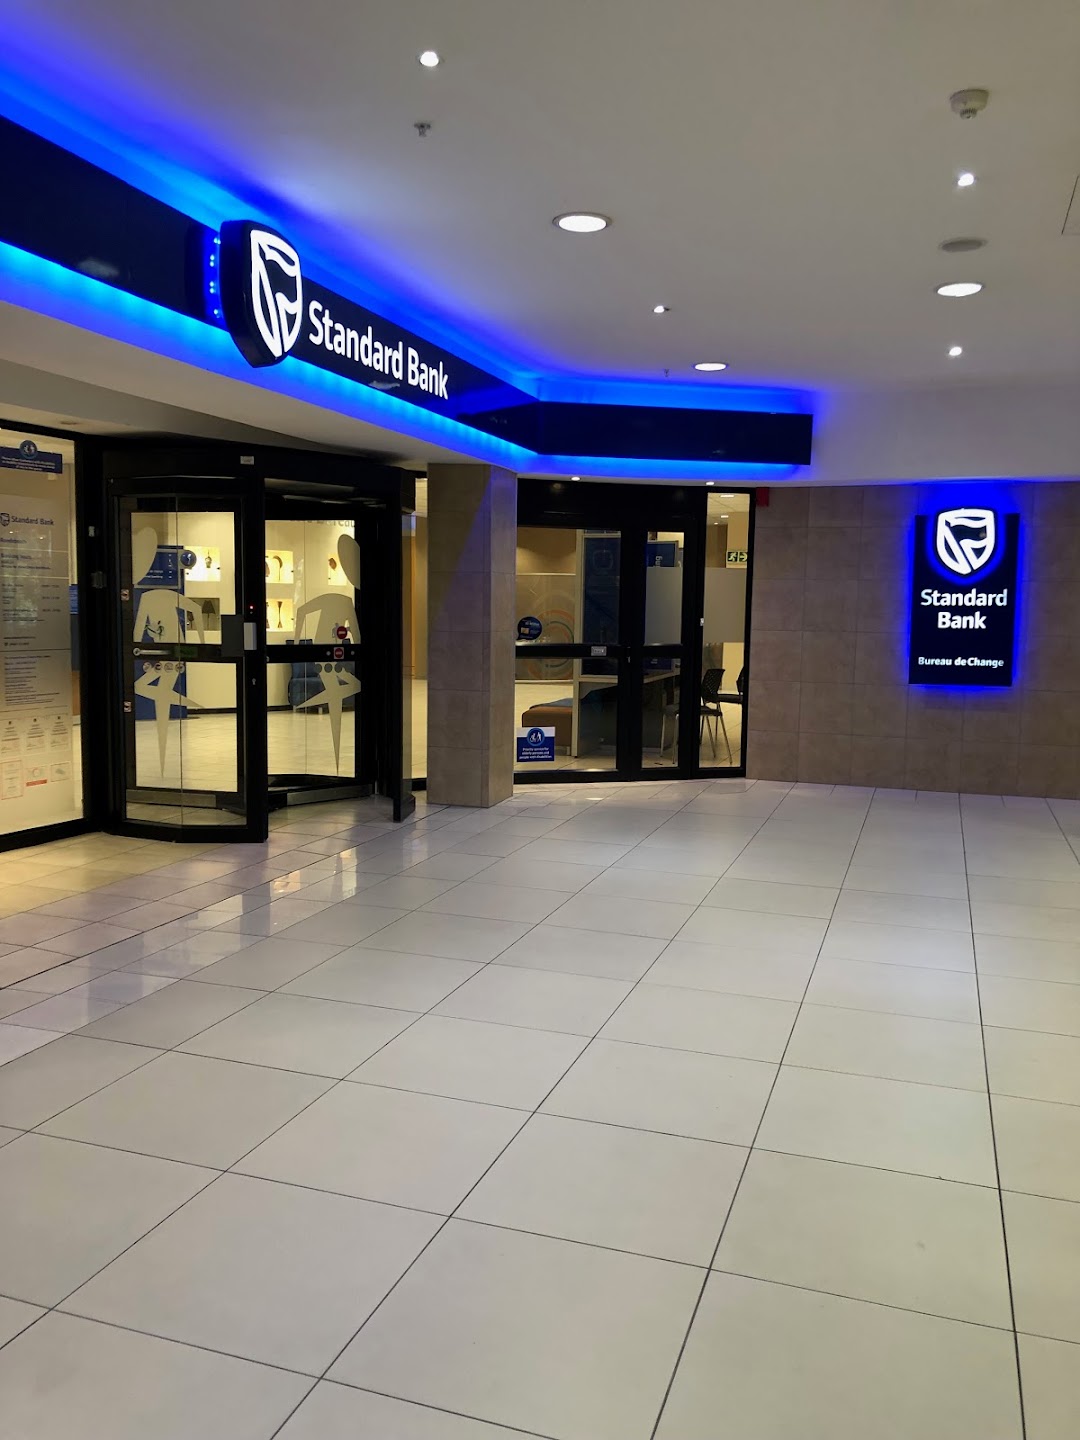 Standard Bank Rondebosch Branch